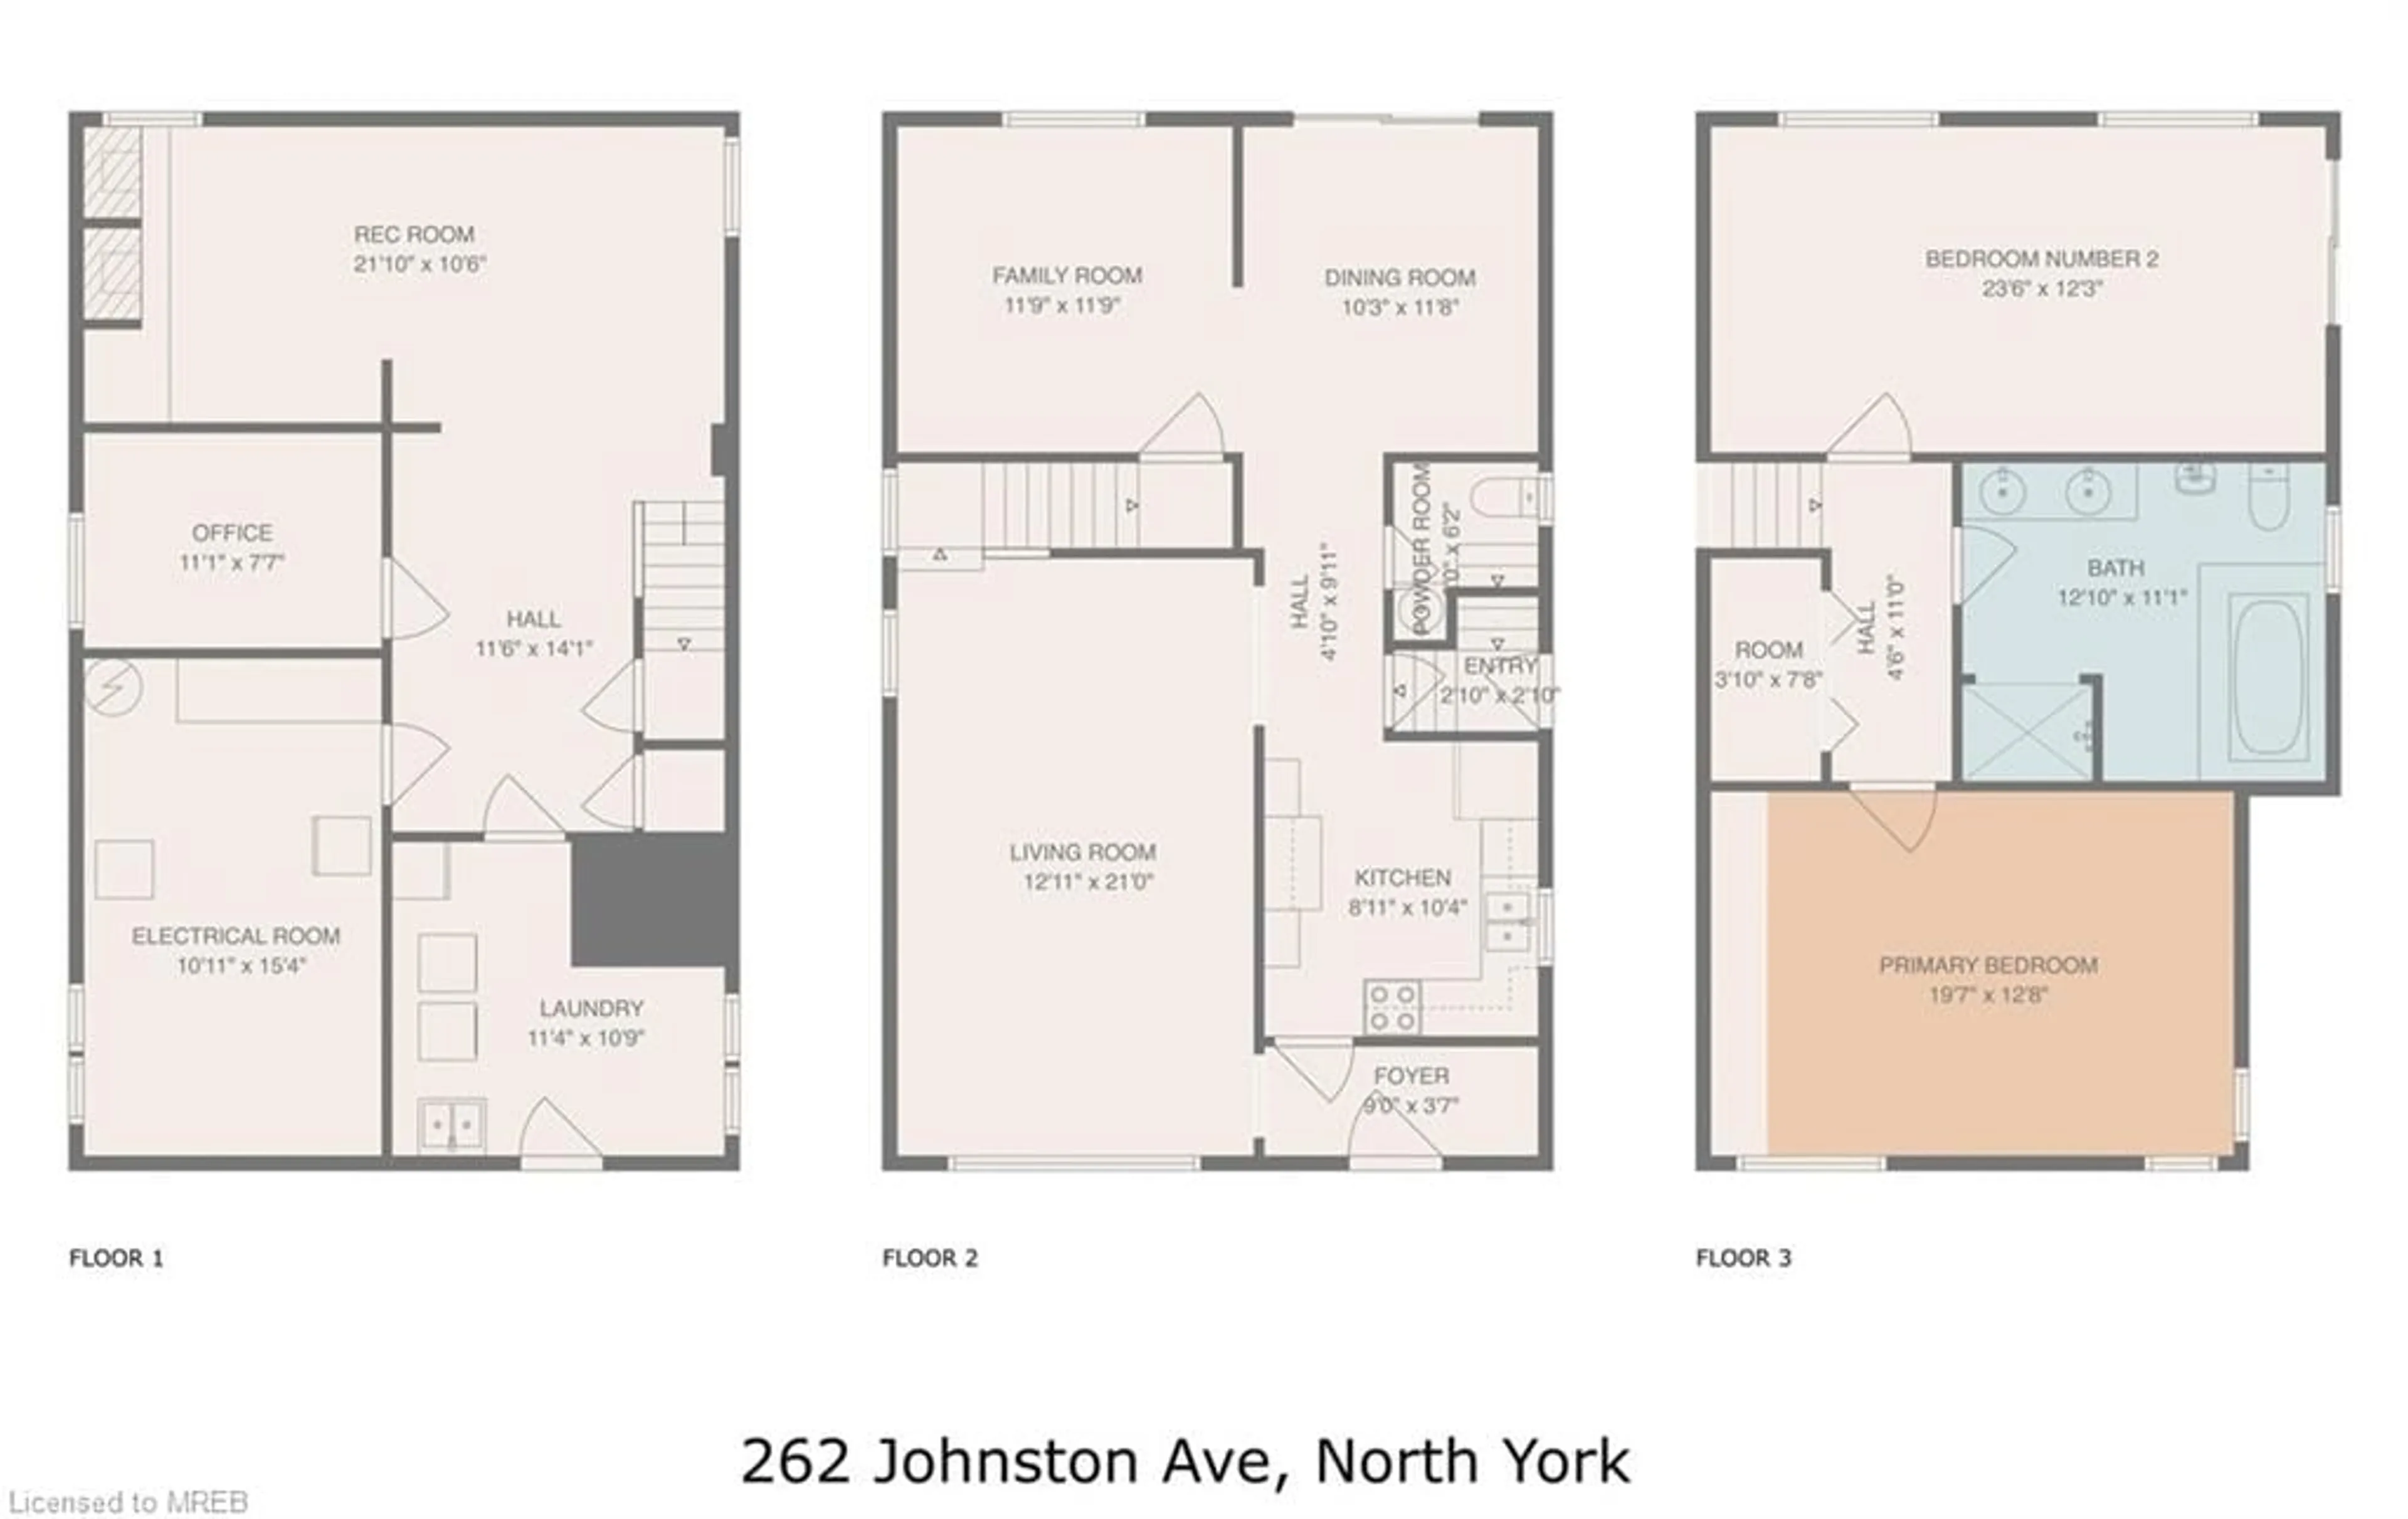 Floor plan for 261 Johnston Ave, North York Ontario M2N 1H5